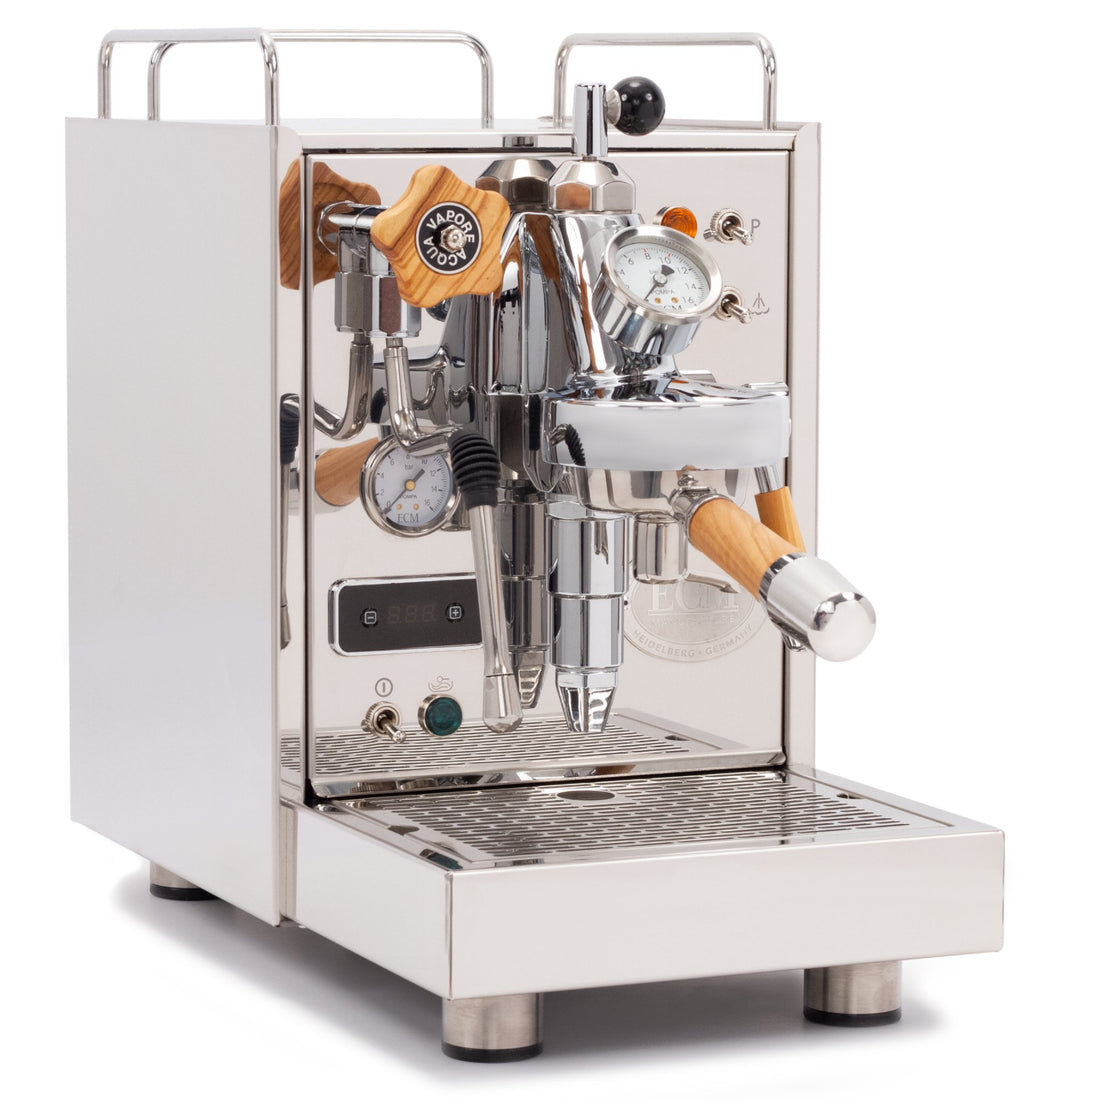 ECM Classika PID Espresso Machine with Flow Control - Olive Wood